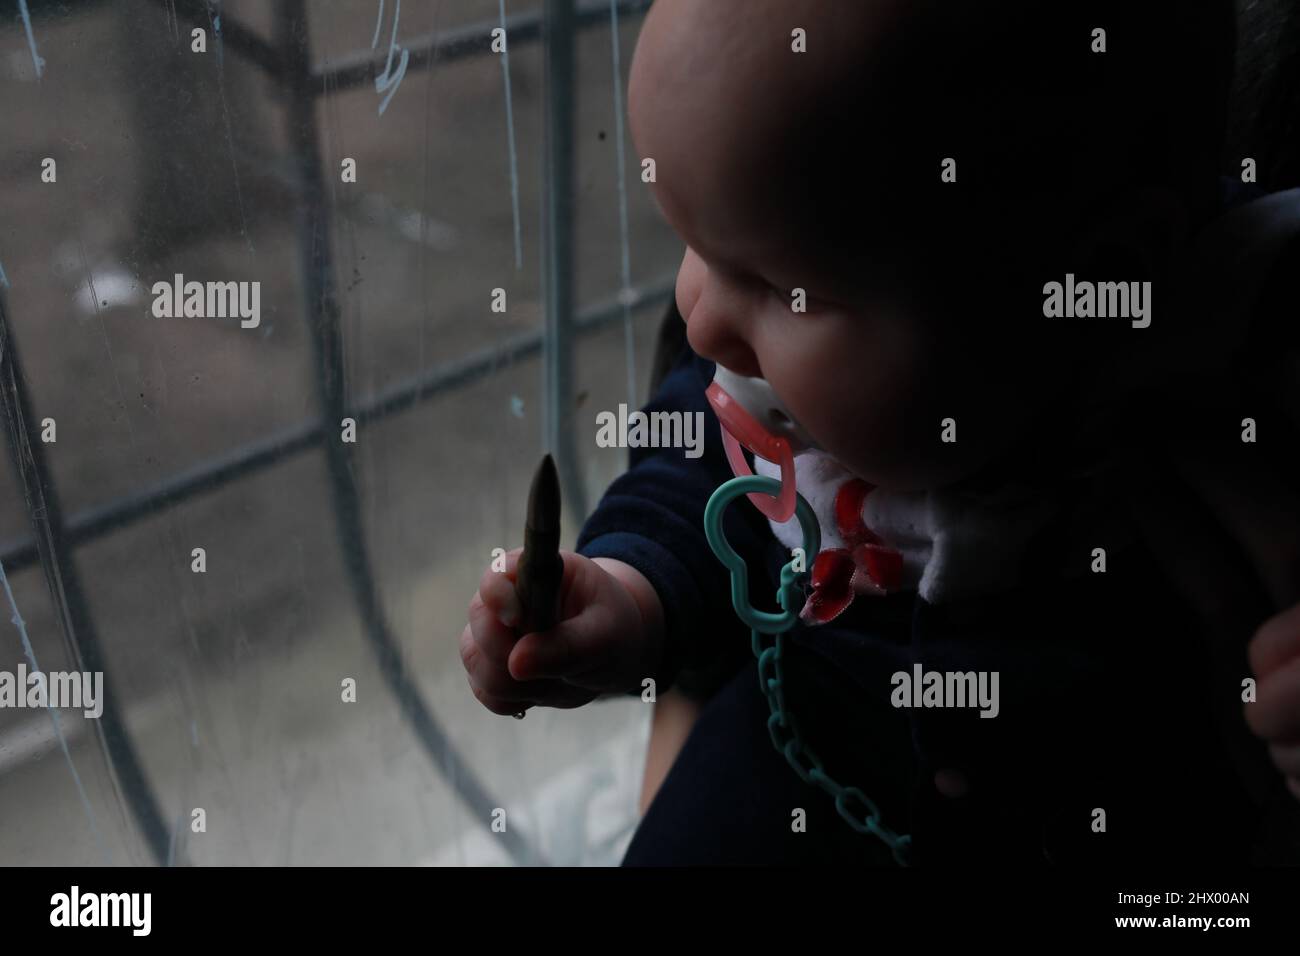 Russia's war against Ukraine. Children hiding in a shelter Stock Photo